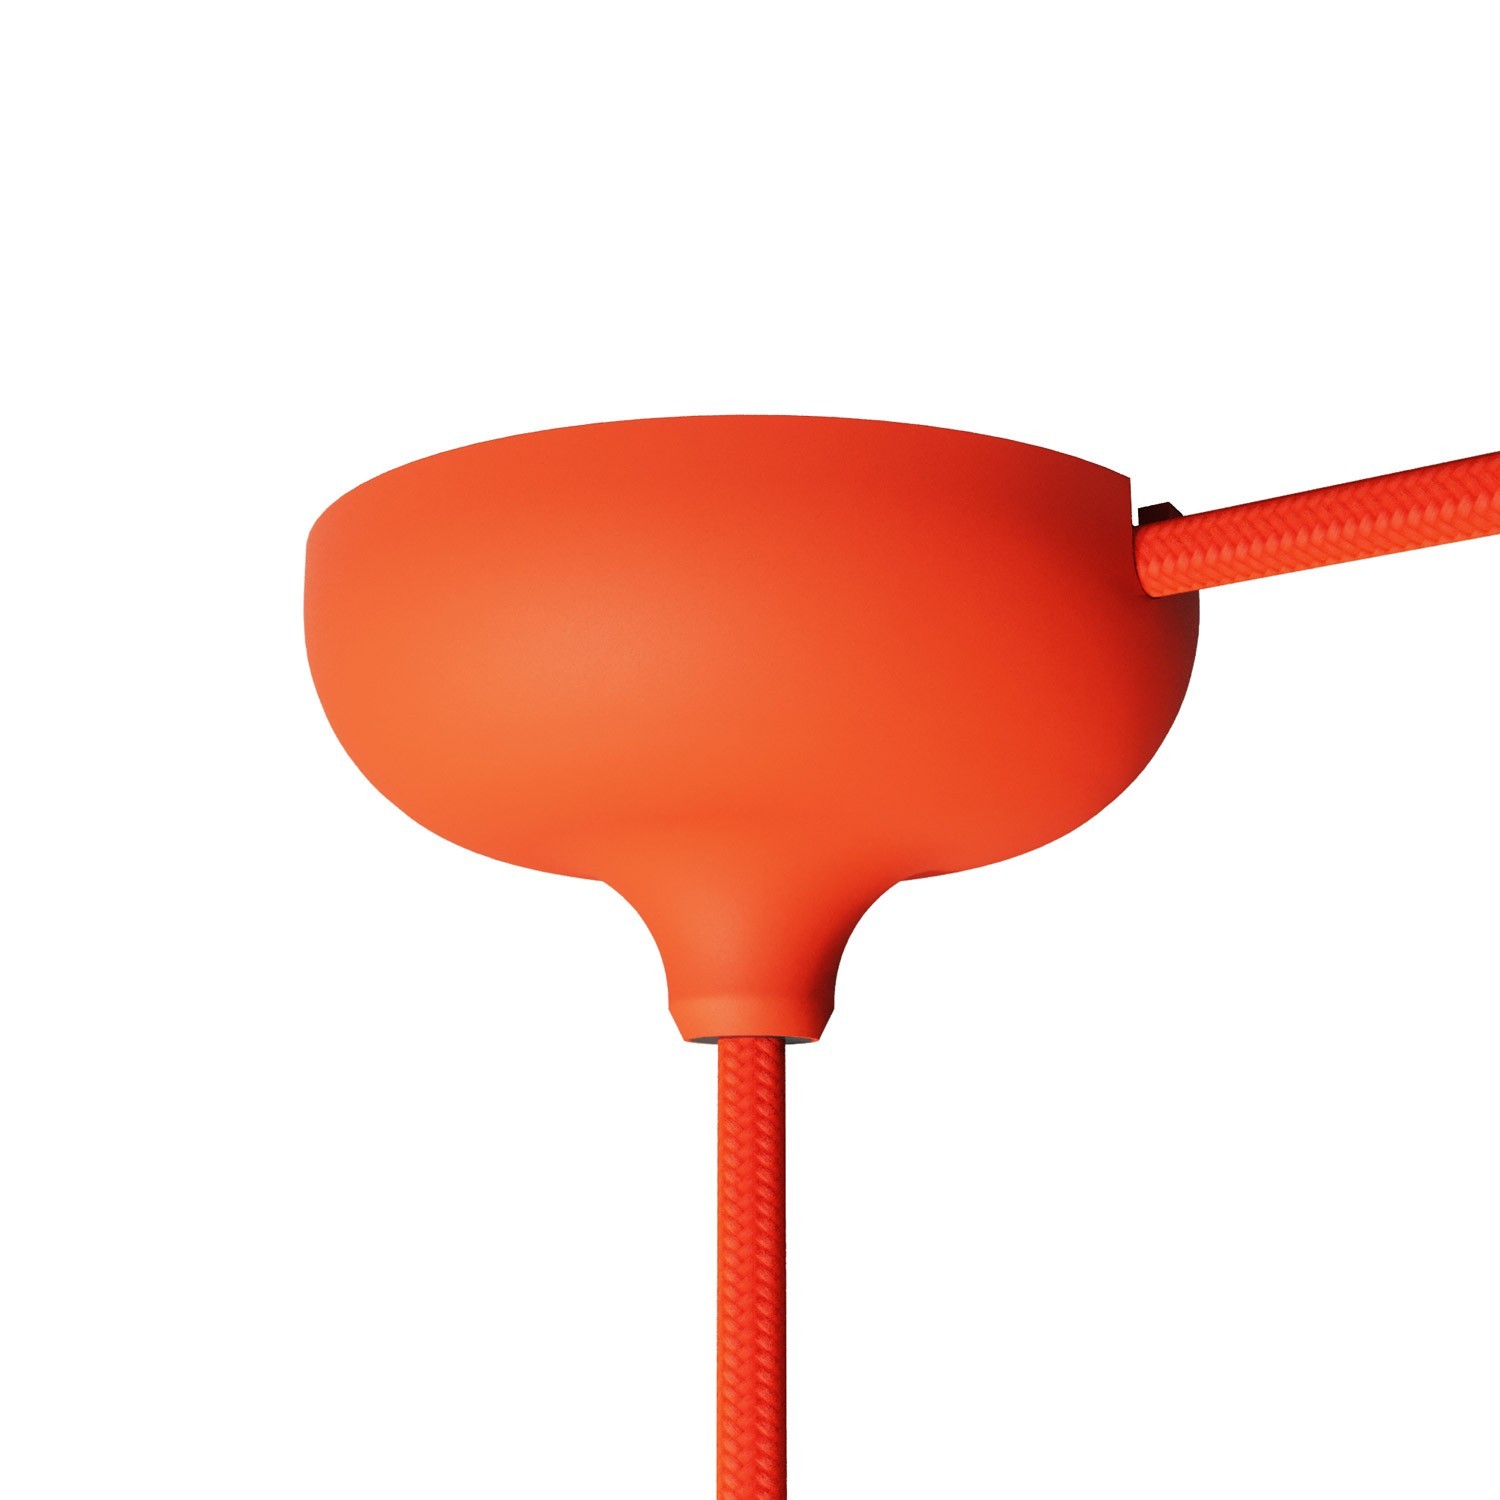 Silikonova-stropna-rozeta-so-stredovym-otvorom-v-oranzovej-farbe-1.jpg